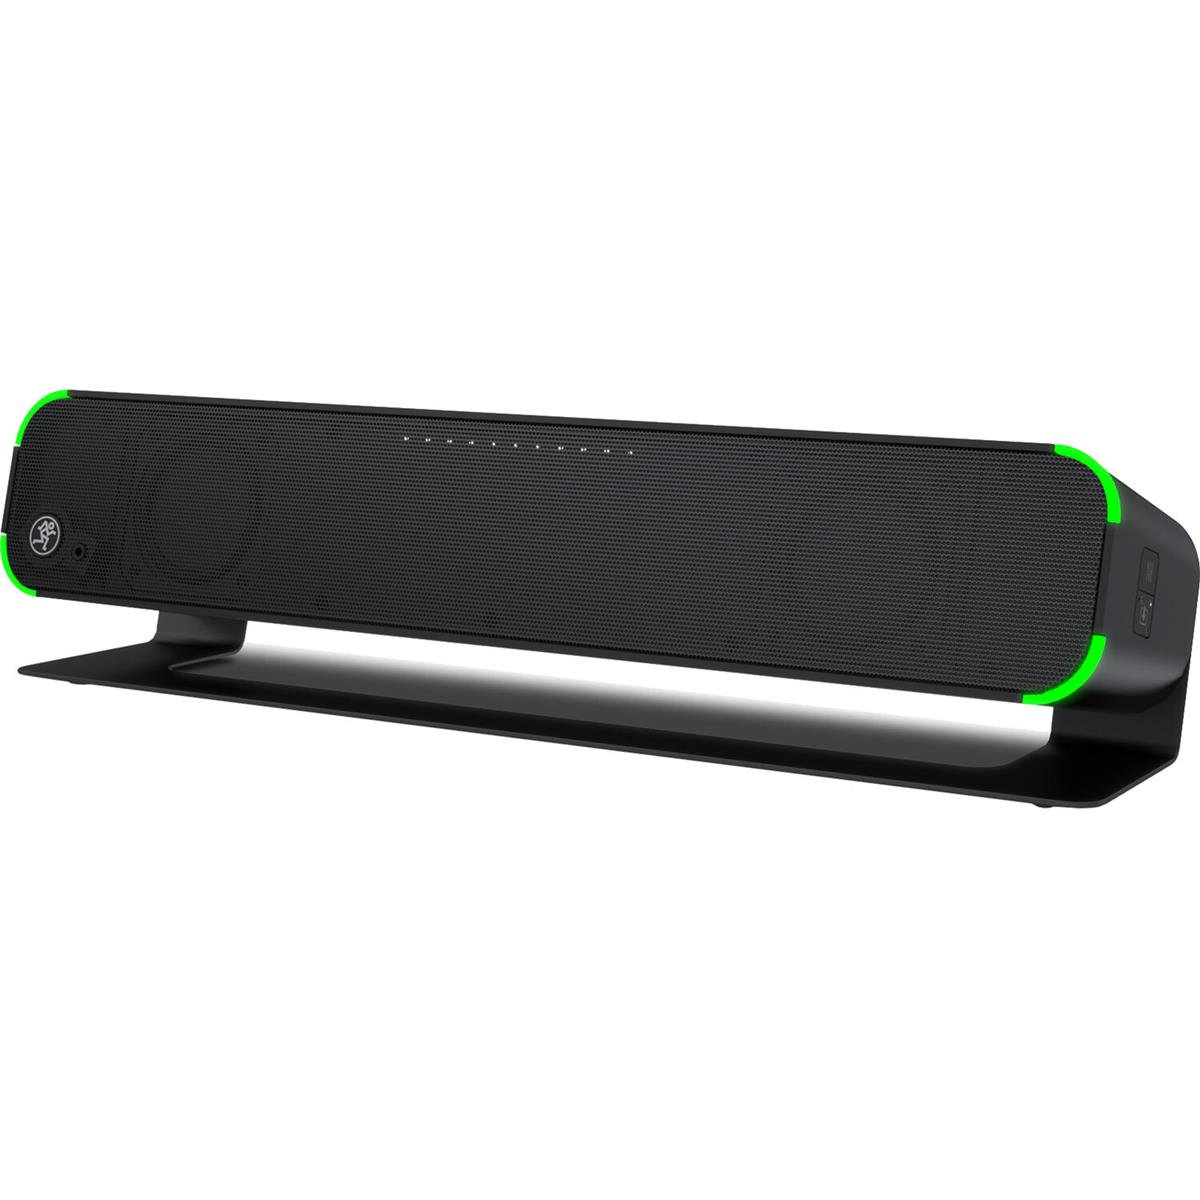 Image of Mackie CR2-X Bar Pro Premium Desktop PC Soundbar with Bluetooth